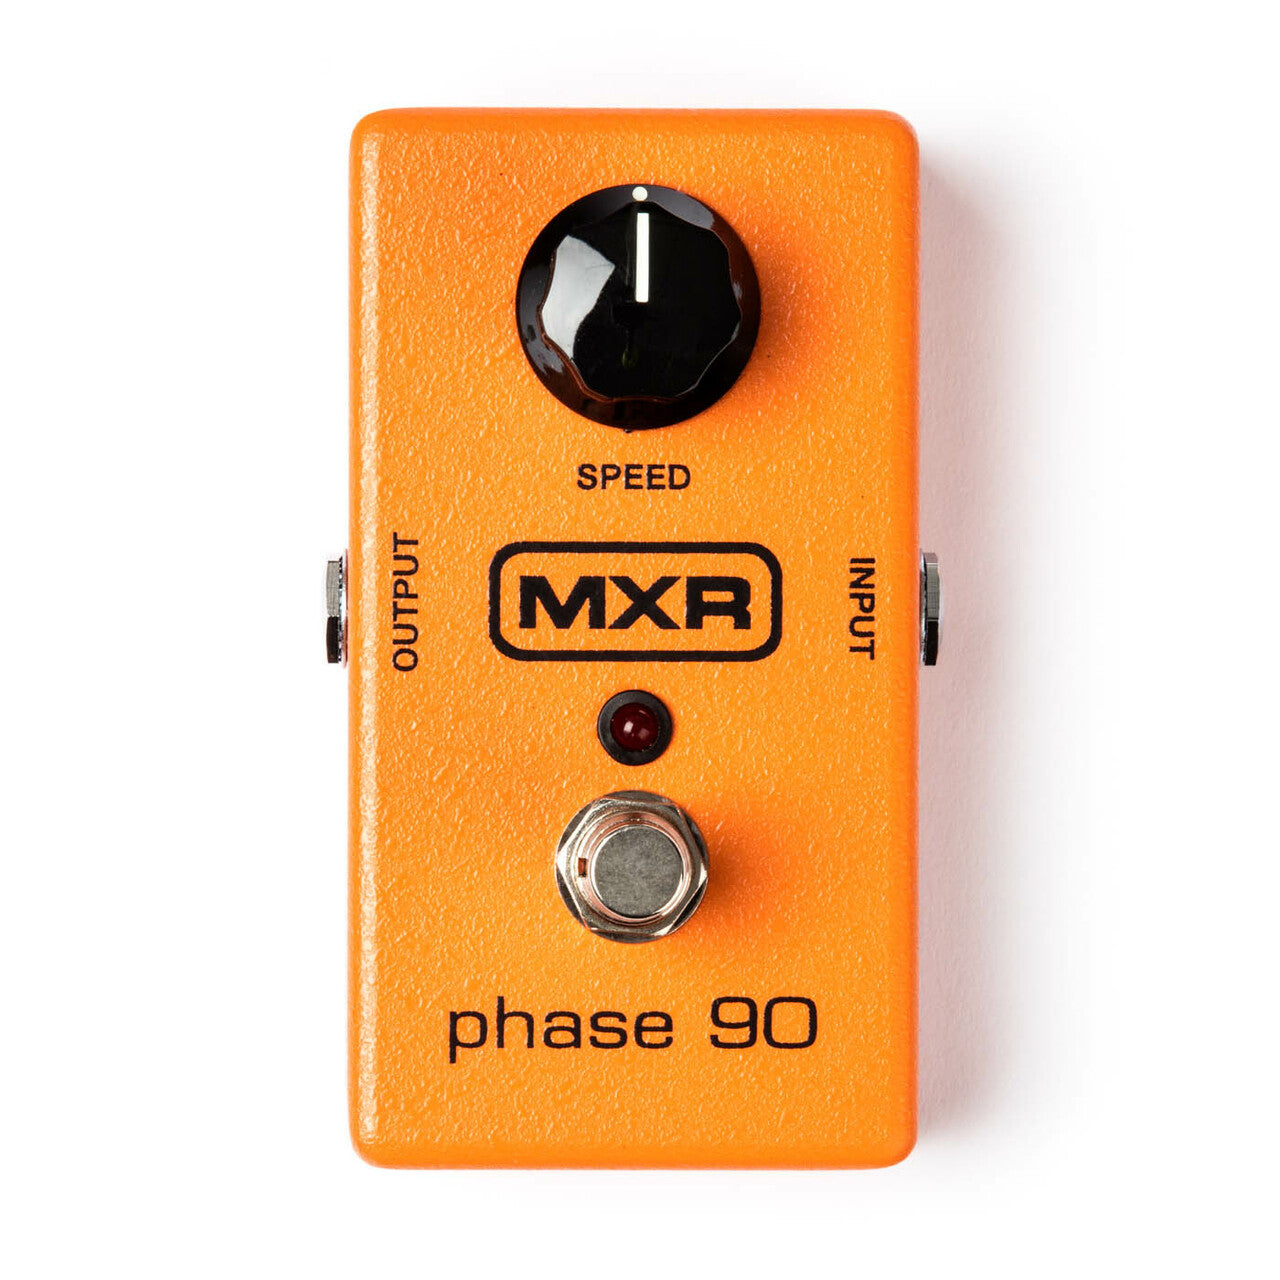 MXR Phase 90 Pedal